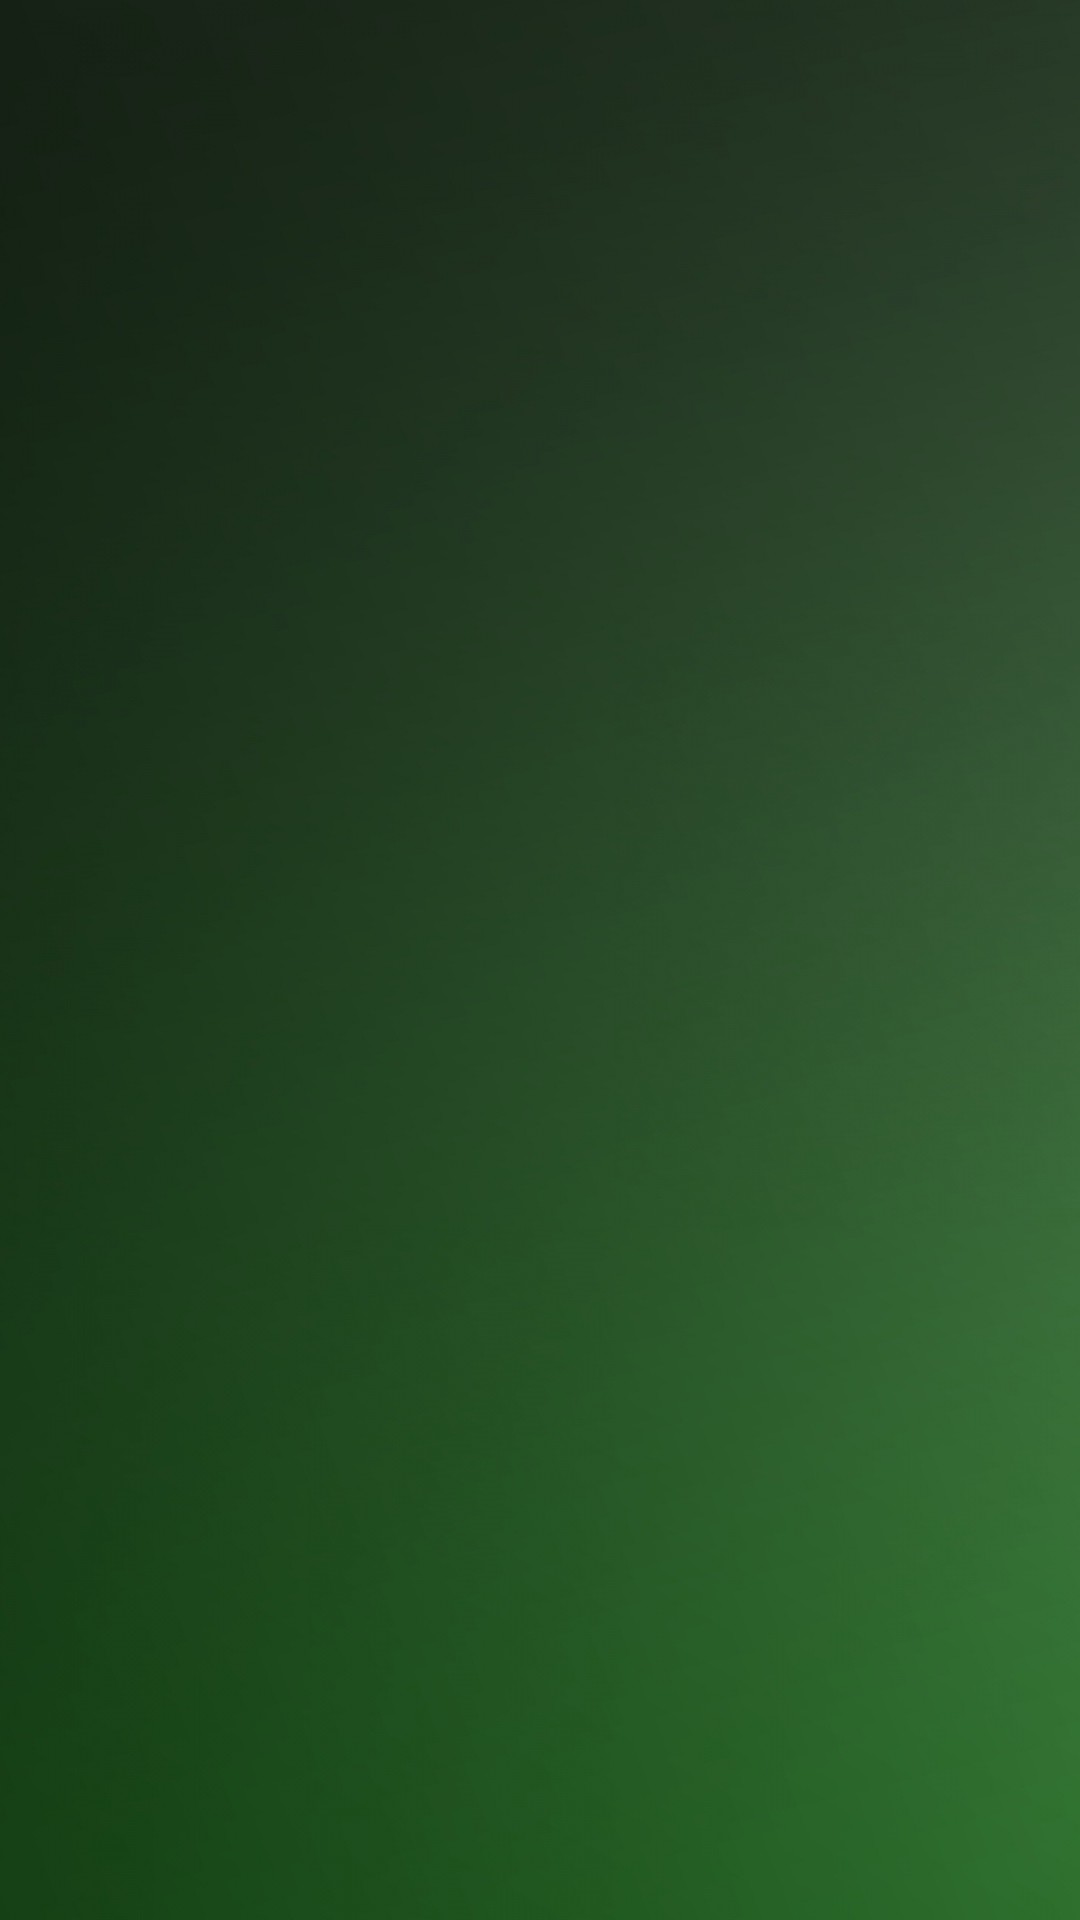 1080x1920 Green Phone Background